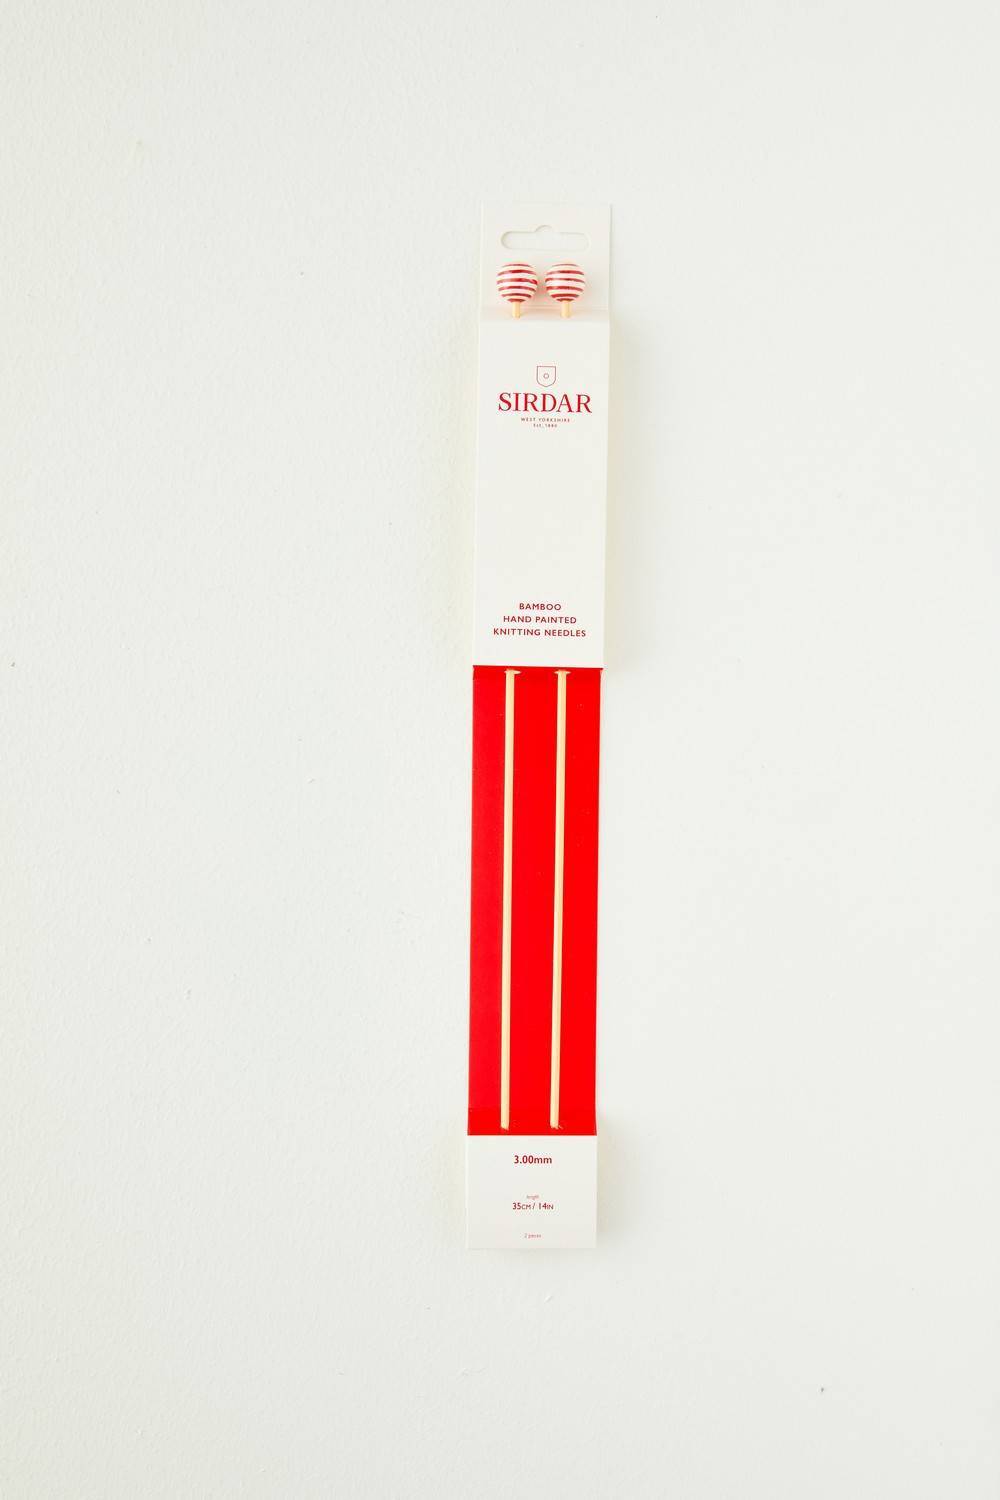 12mm Long Bamboo Knitting Needles (35cm)